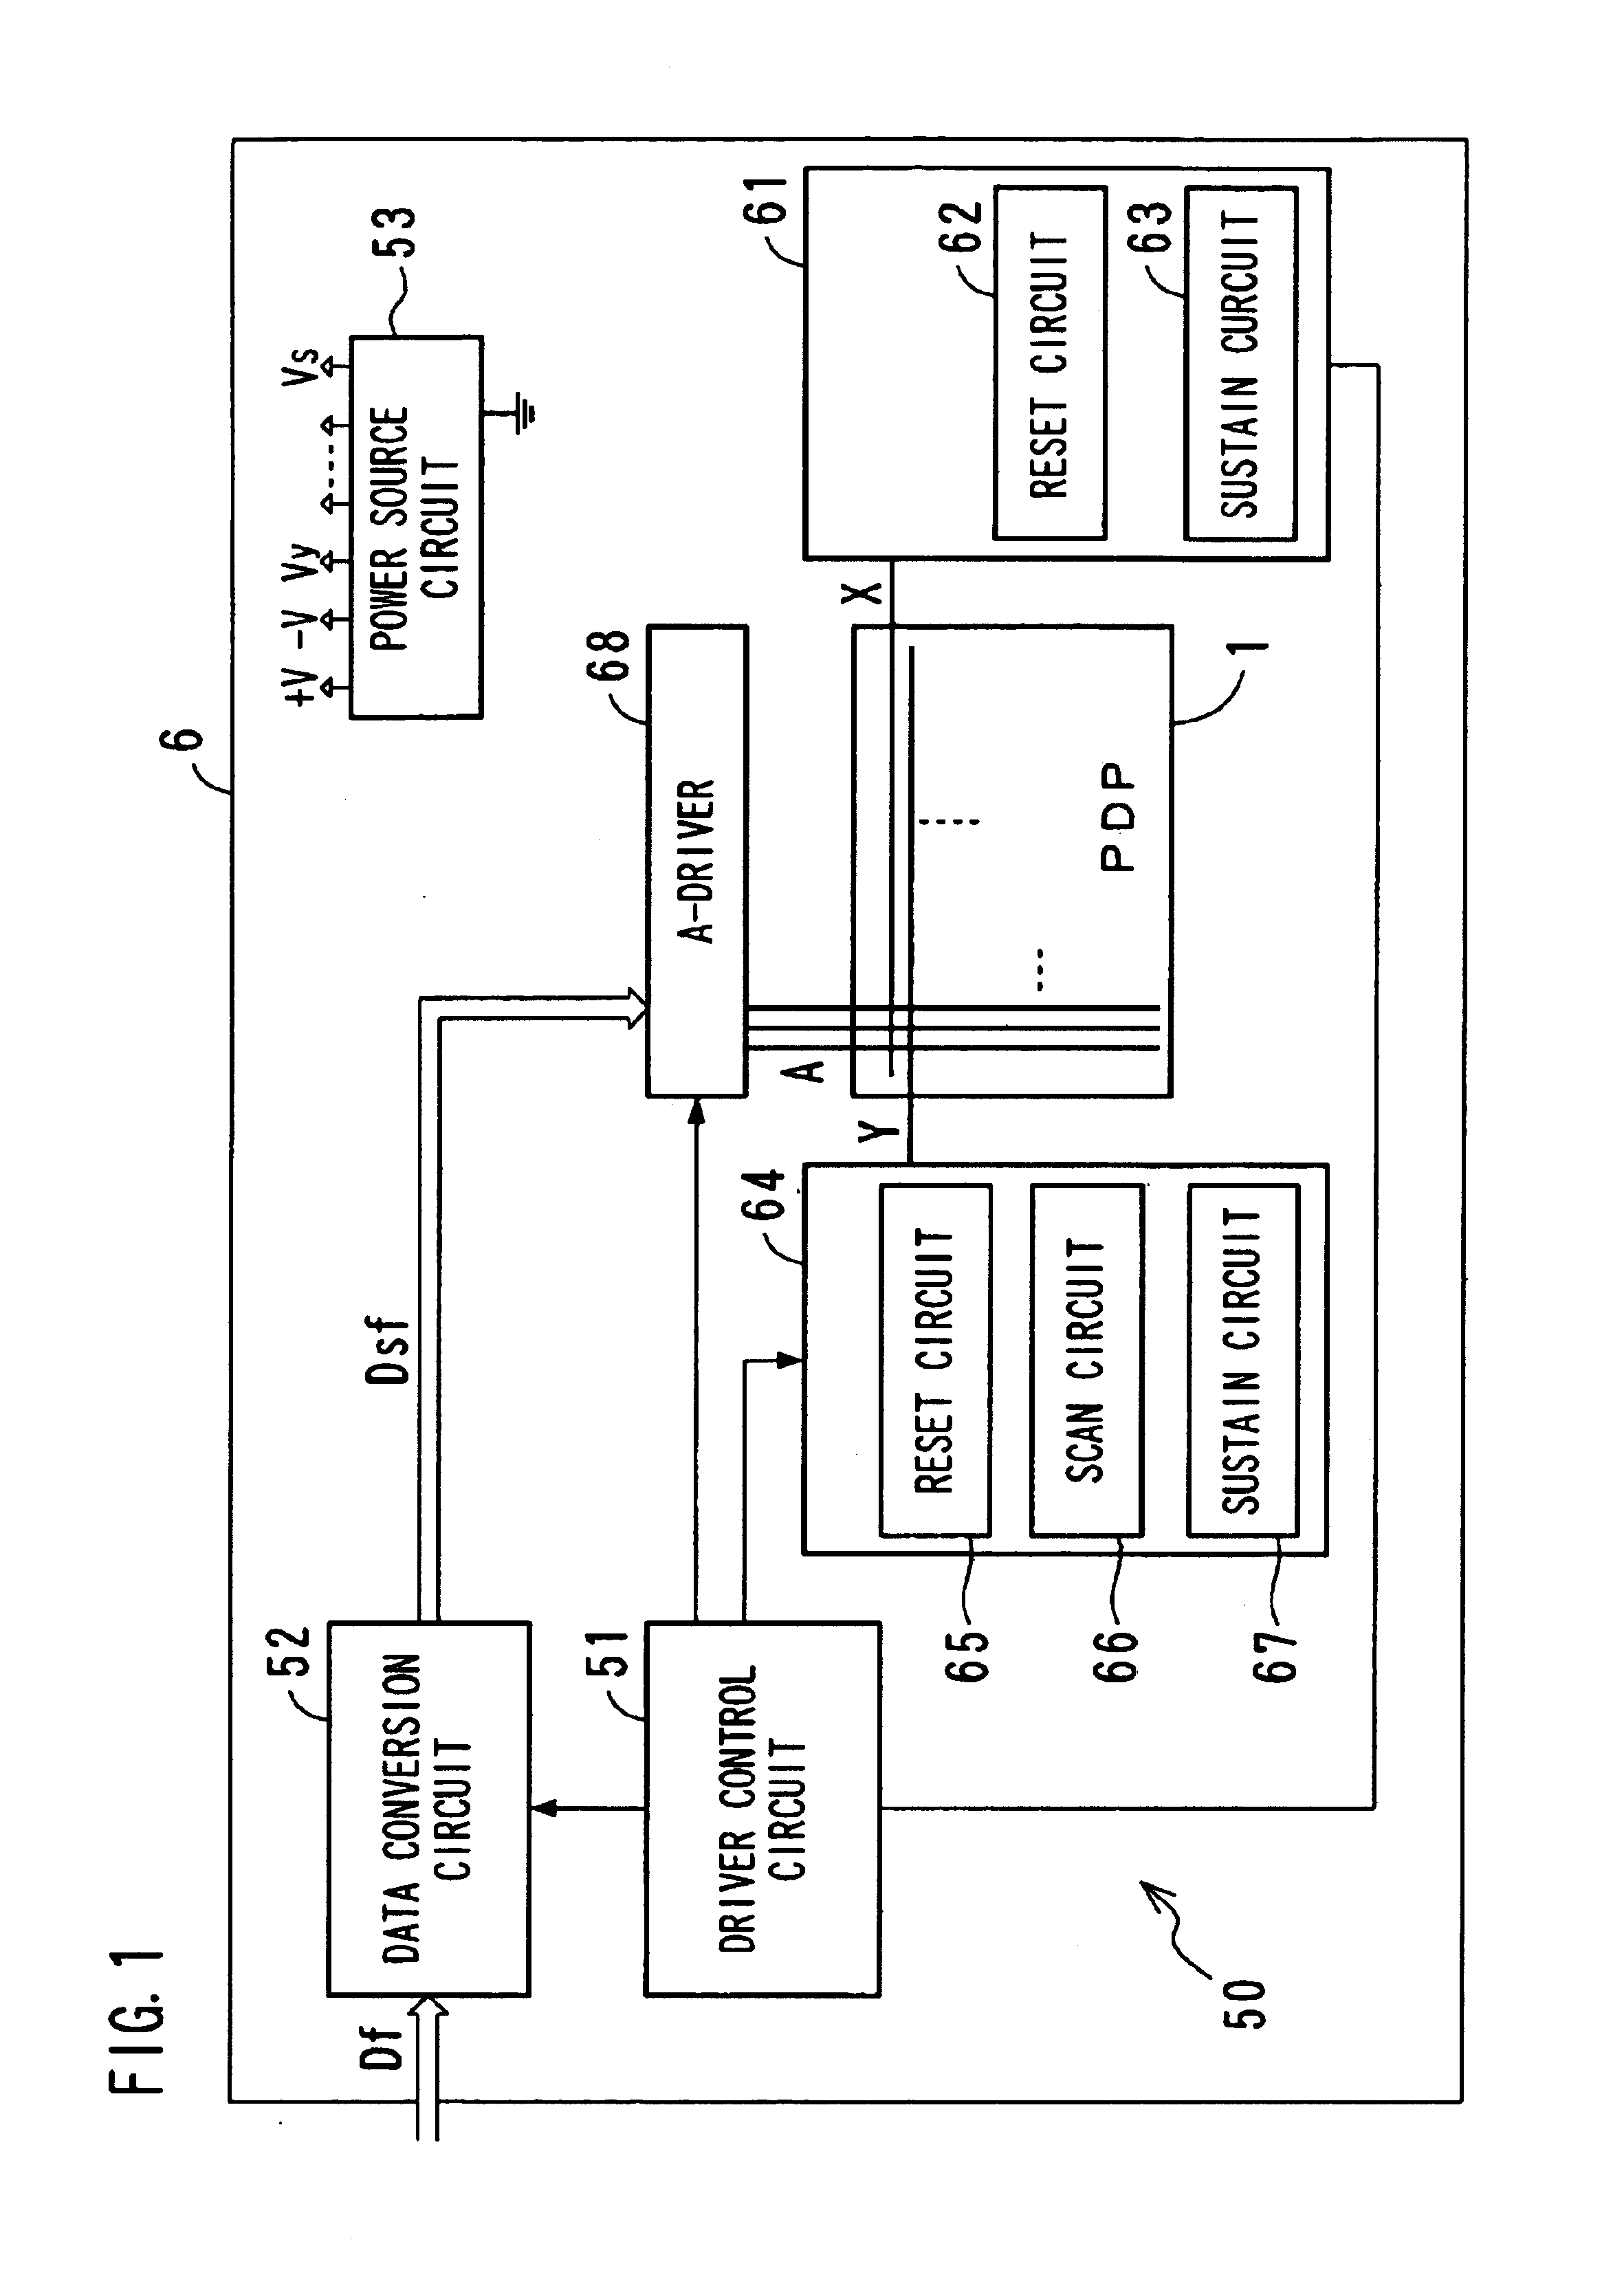 Method and device for driving plasma display panel